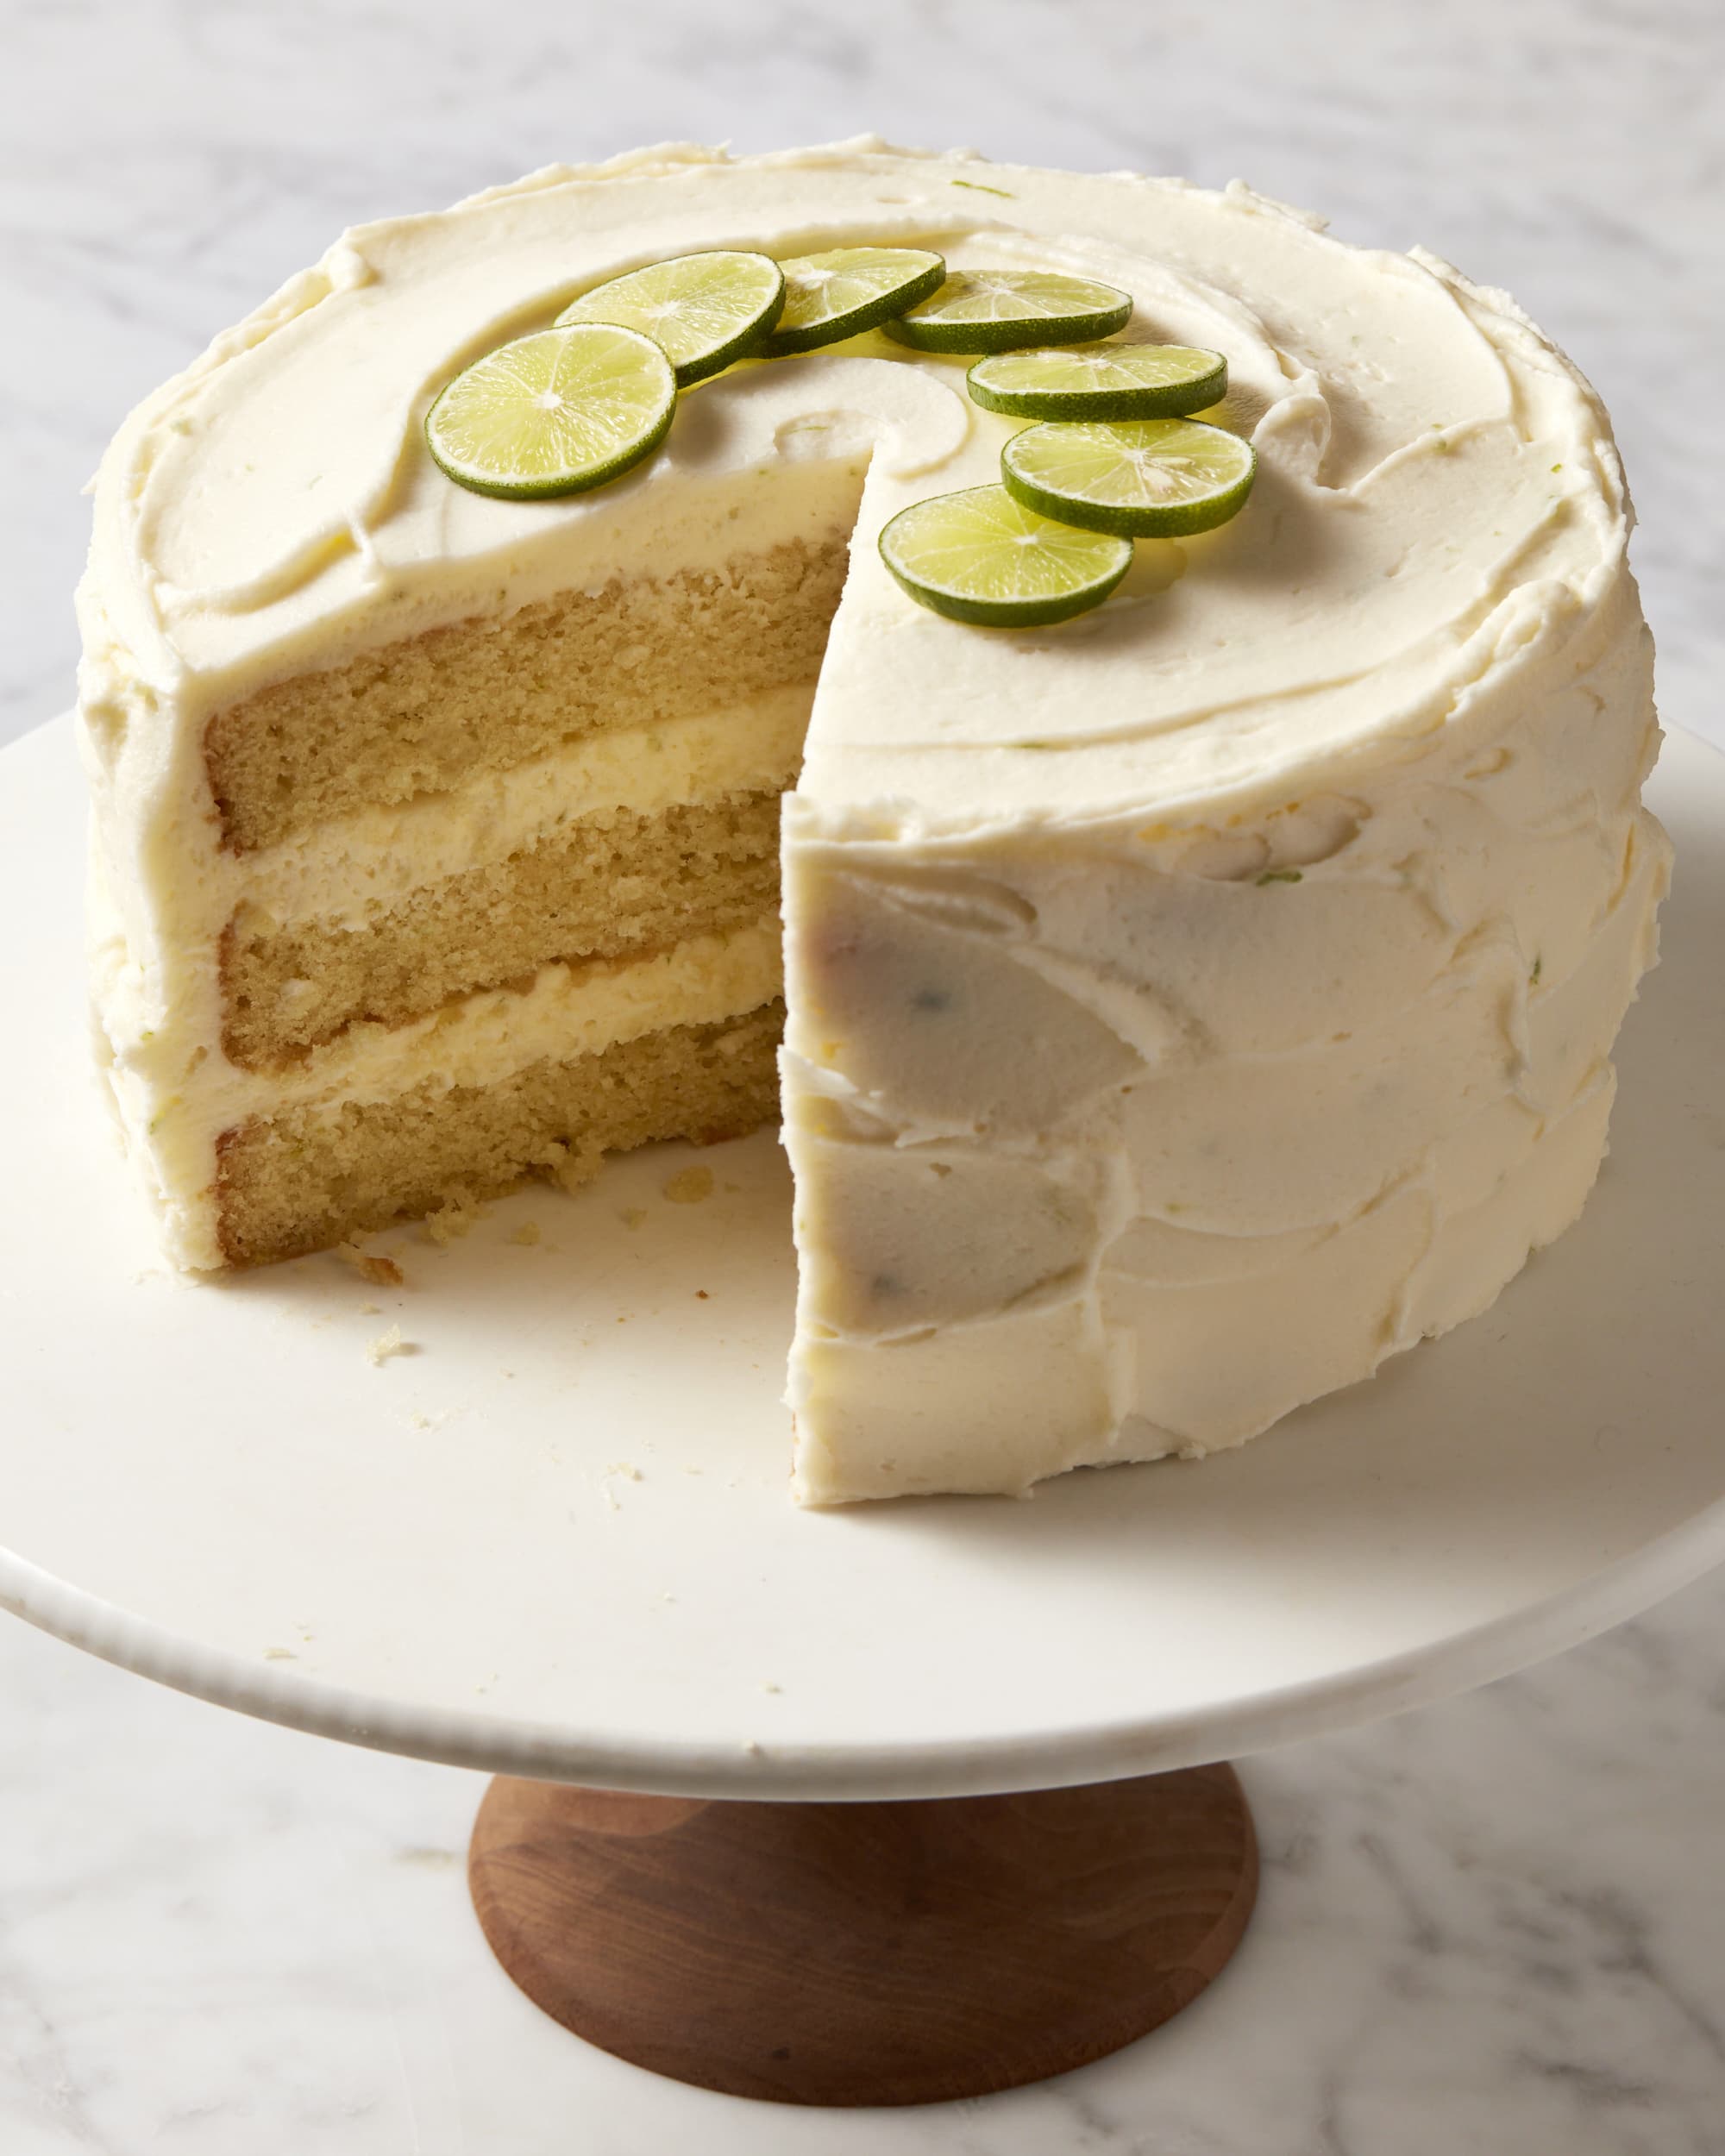 Lime Chiffon Cake Recipe: How to Make It